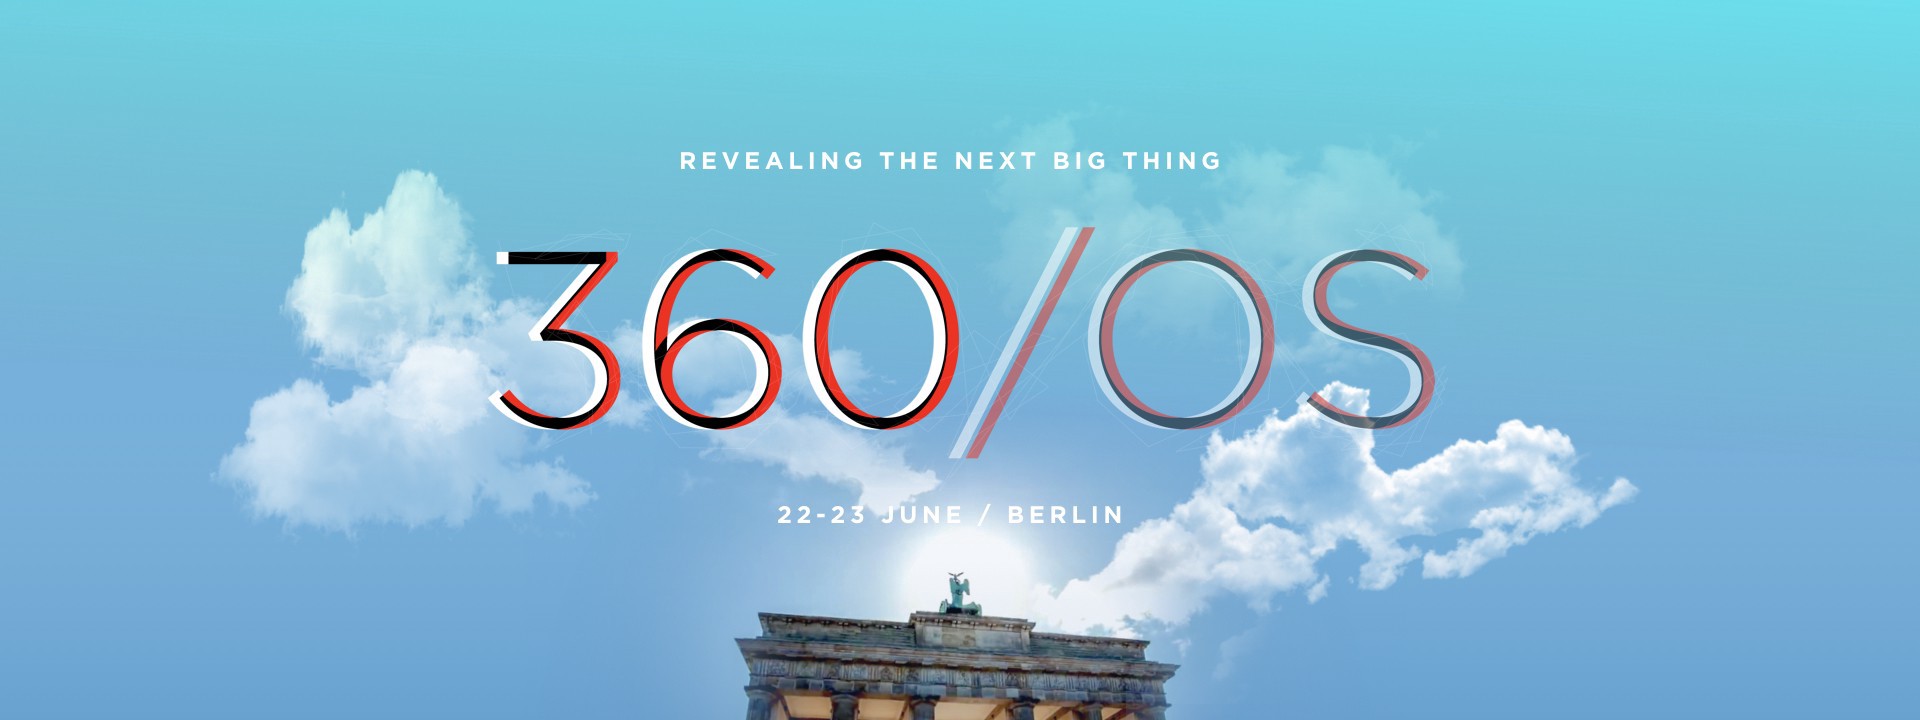 360/OS Open Source Summit: Meet Us In Berlin